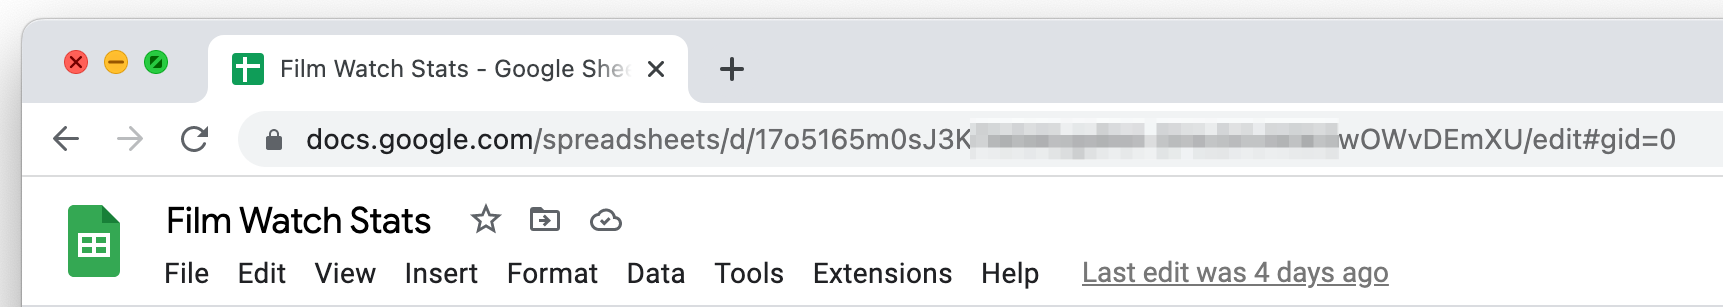 Address bar in Google Chrome showing Google Sheet webpage